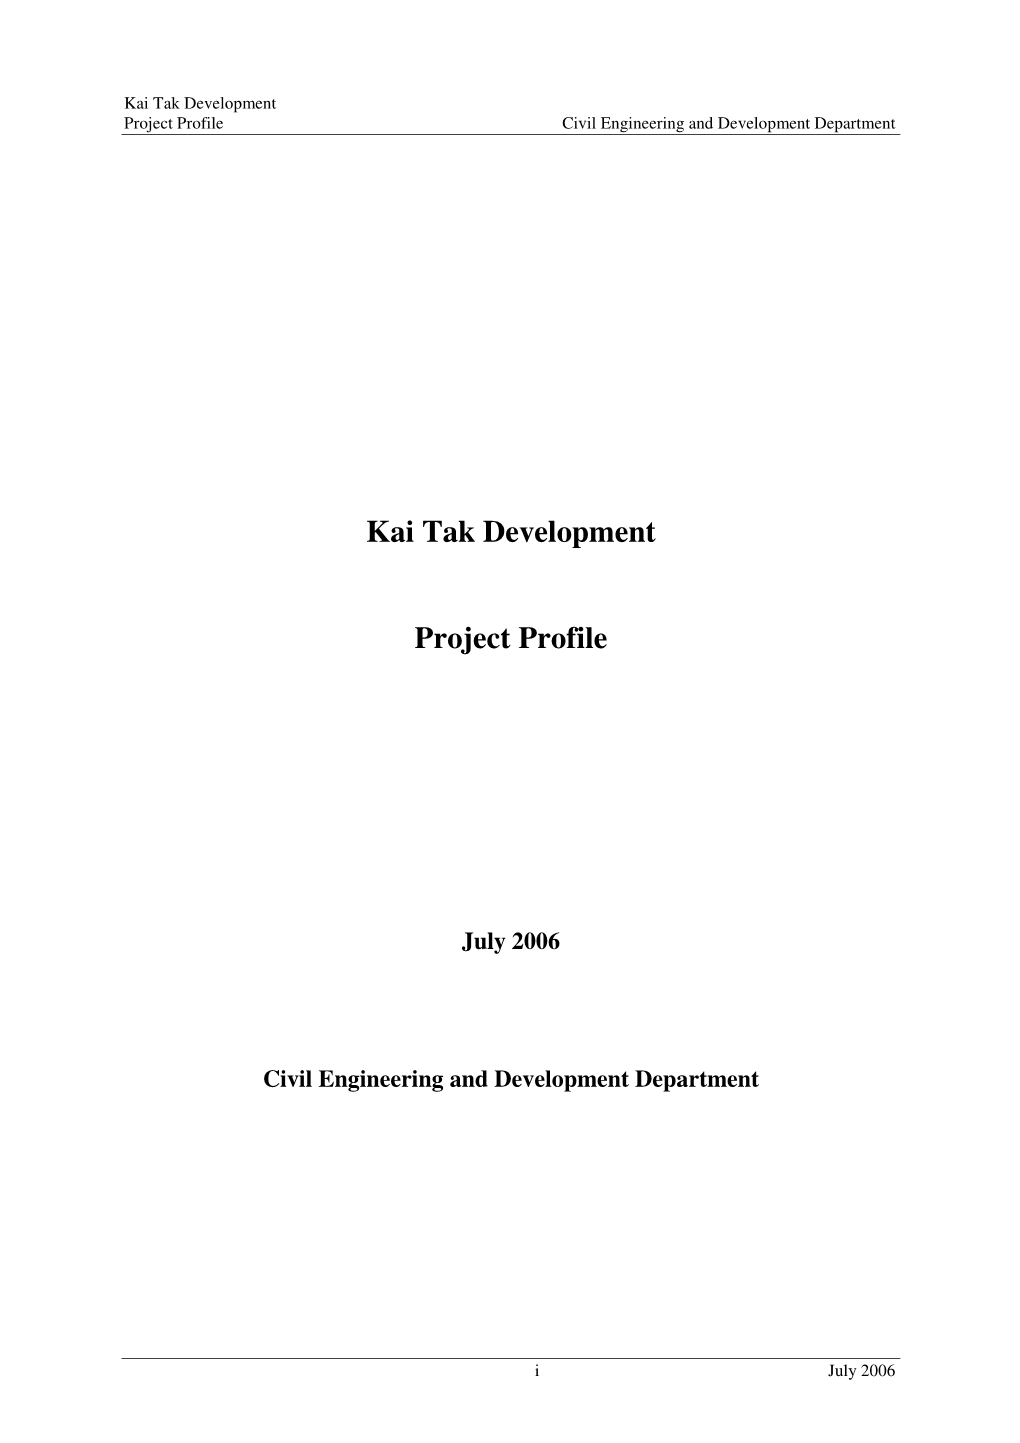 Kai Tak Development Project Profile Civil Engineering and Development Department